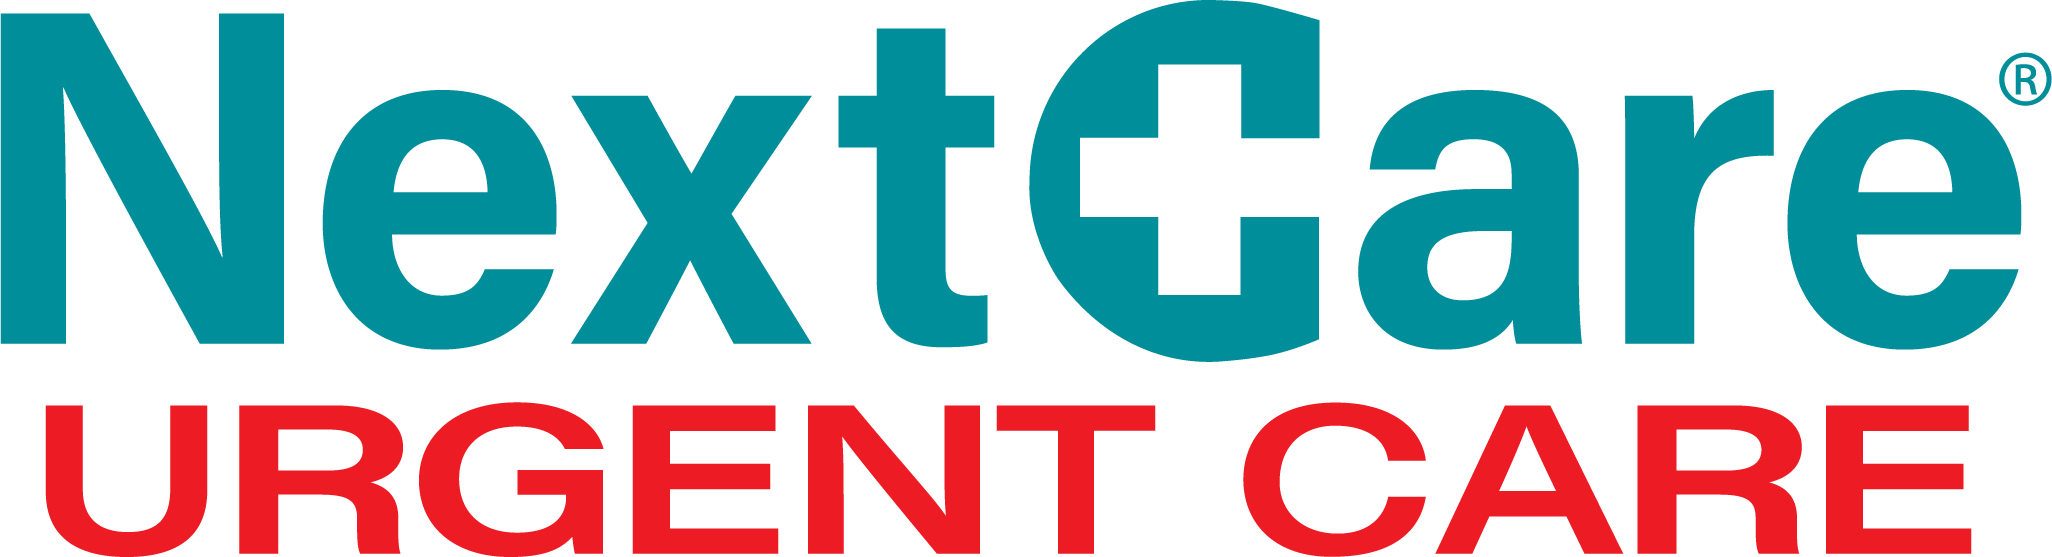 NextCare Urgent Care - Cache Logo